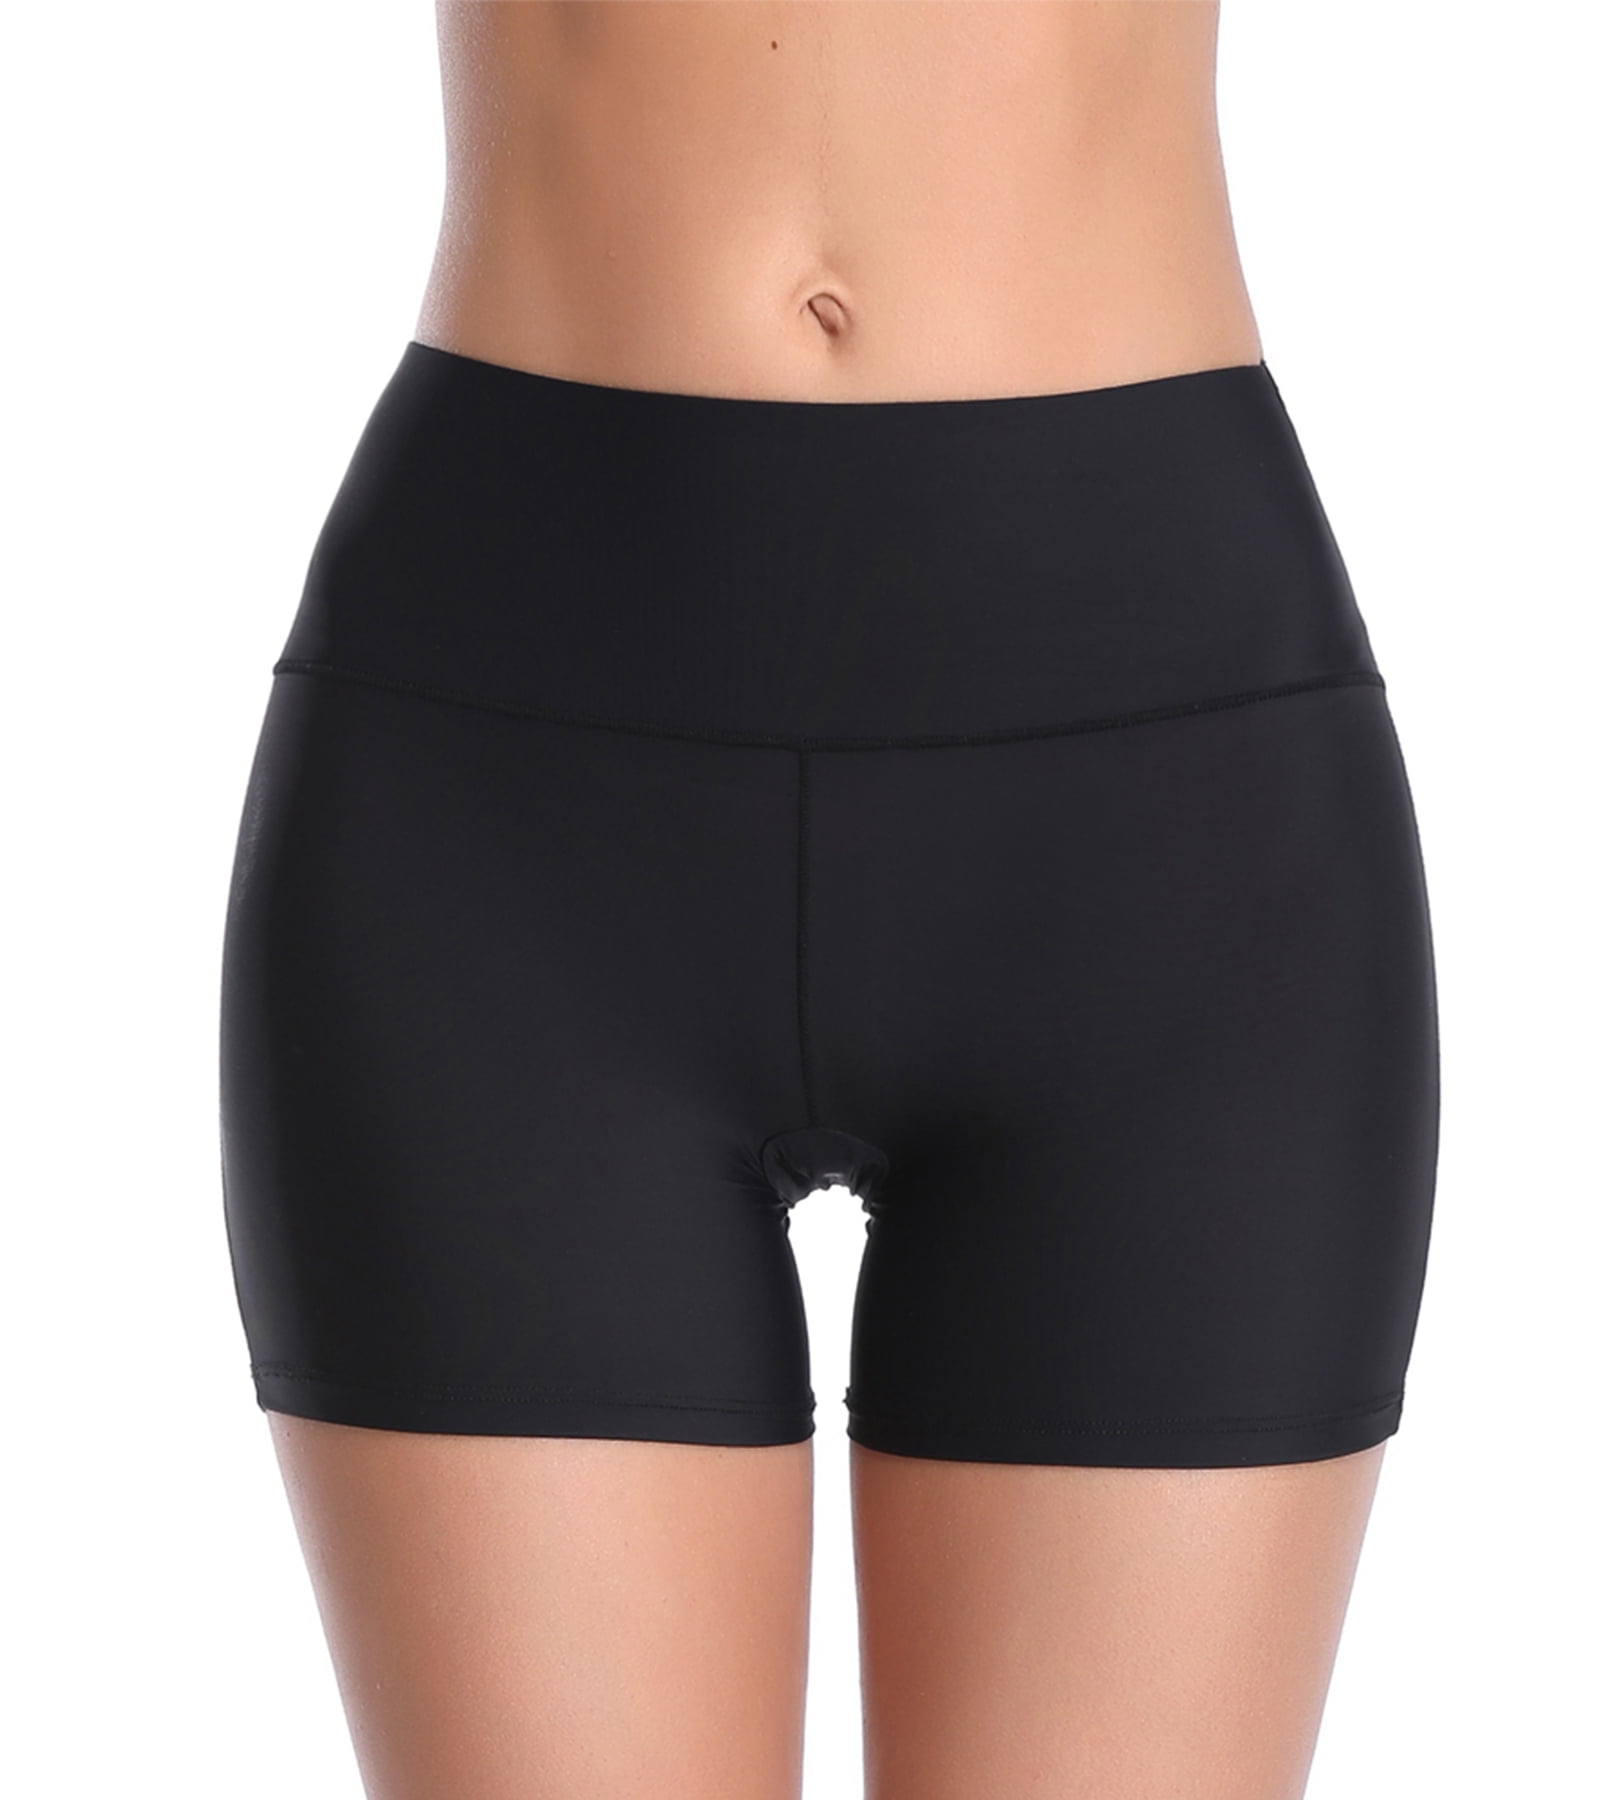 JOYSHAPER Boyshorts Panties for Women Anti Chafing Underwear Slip Shorts for Women Under Dress 